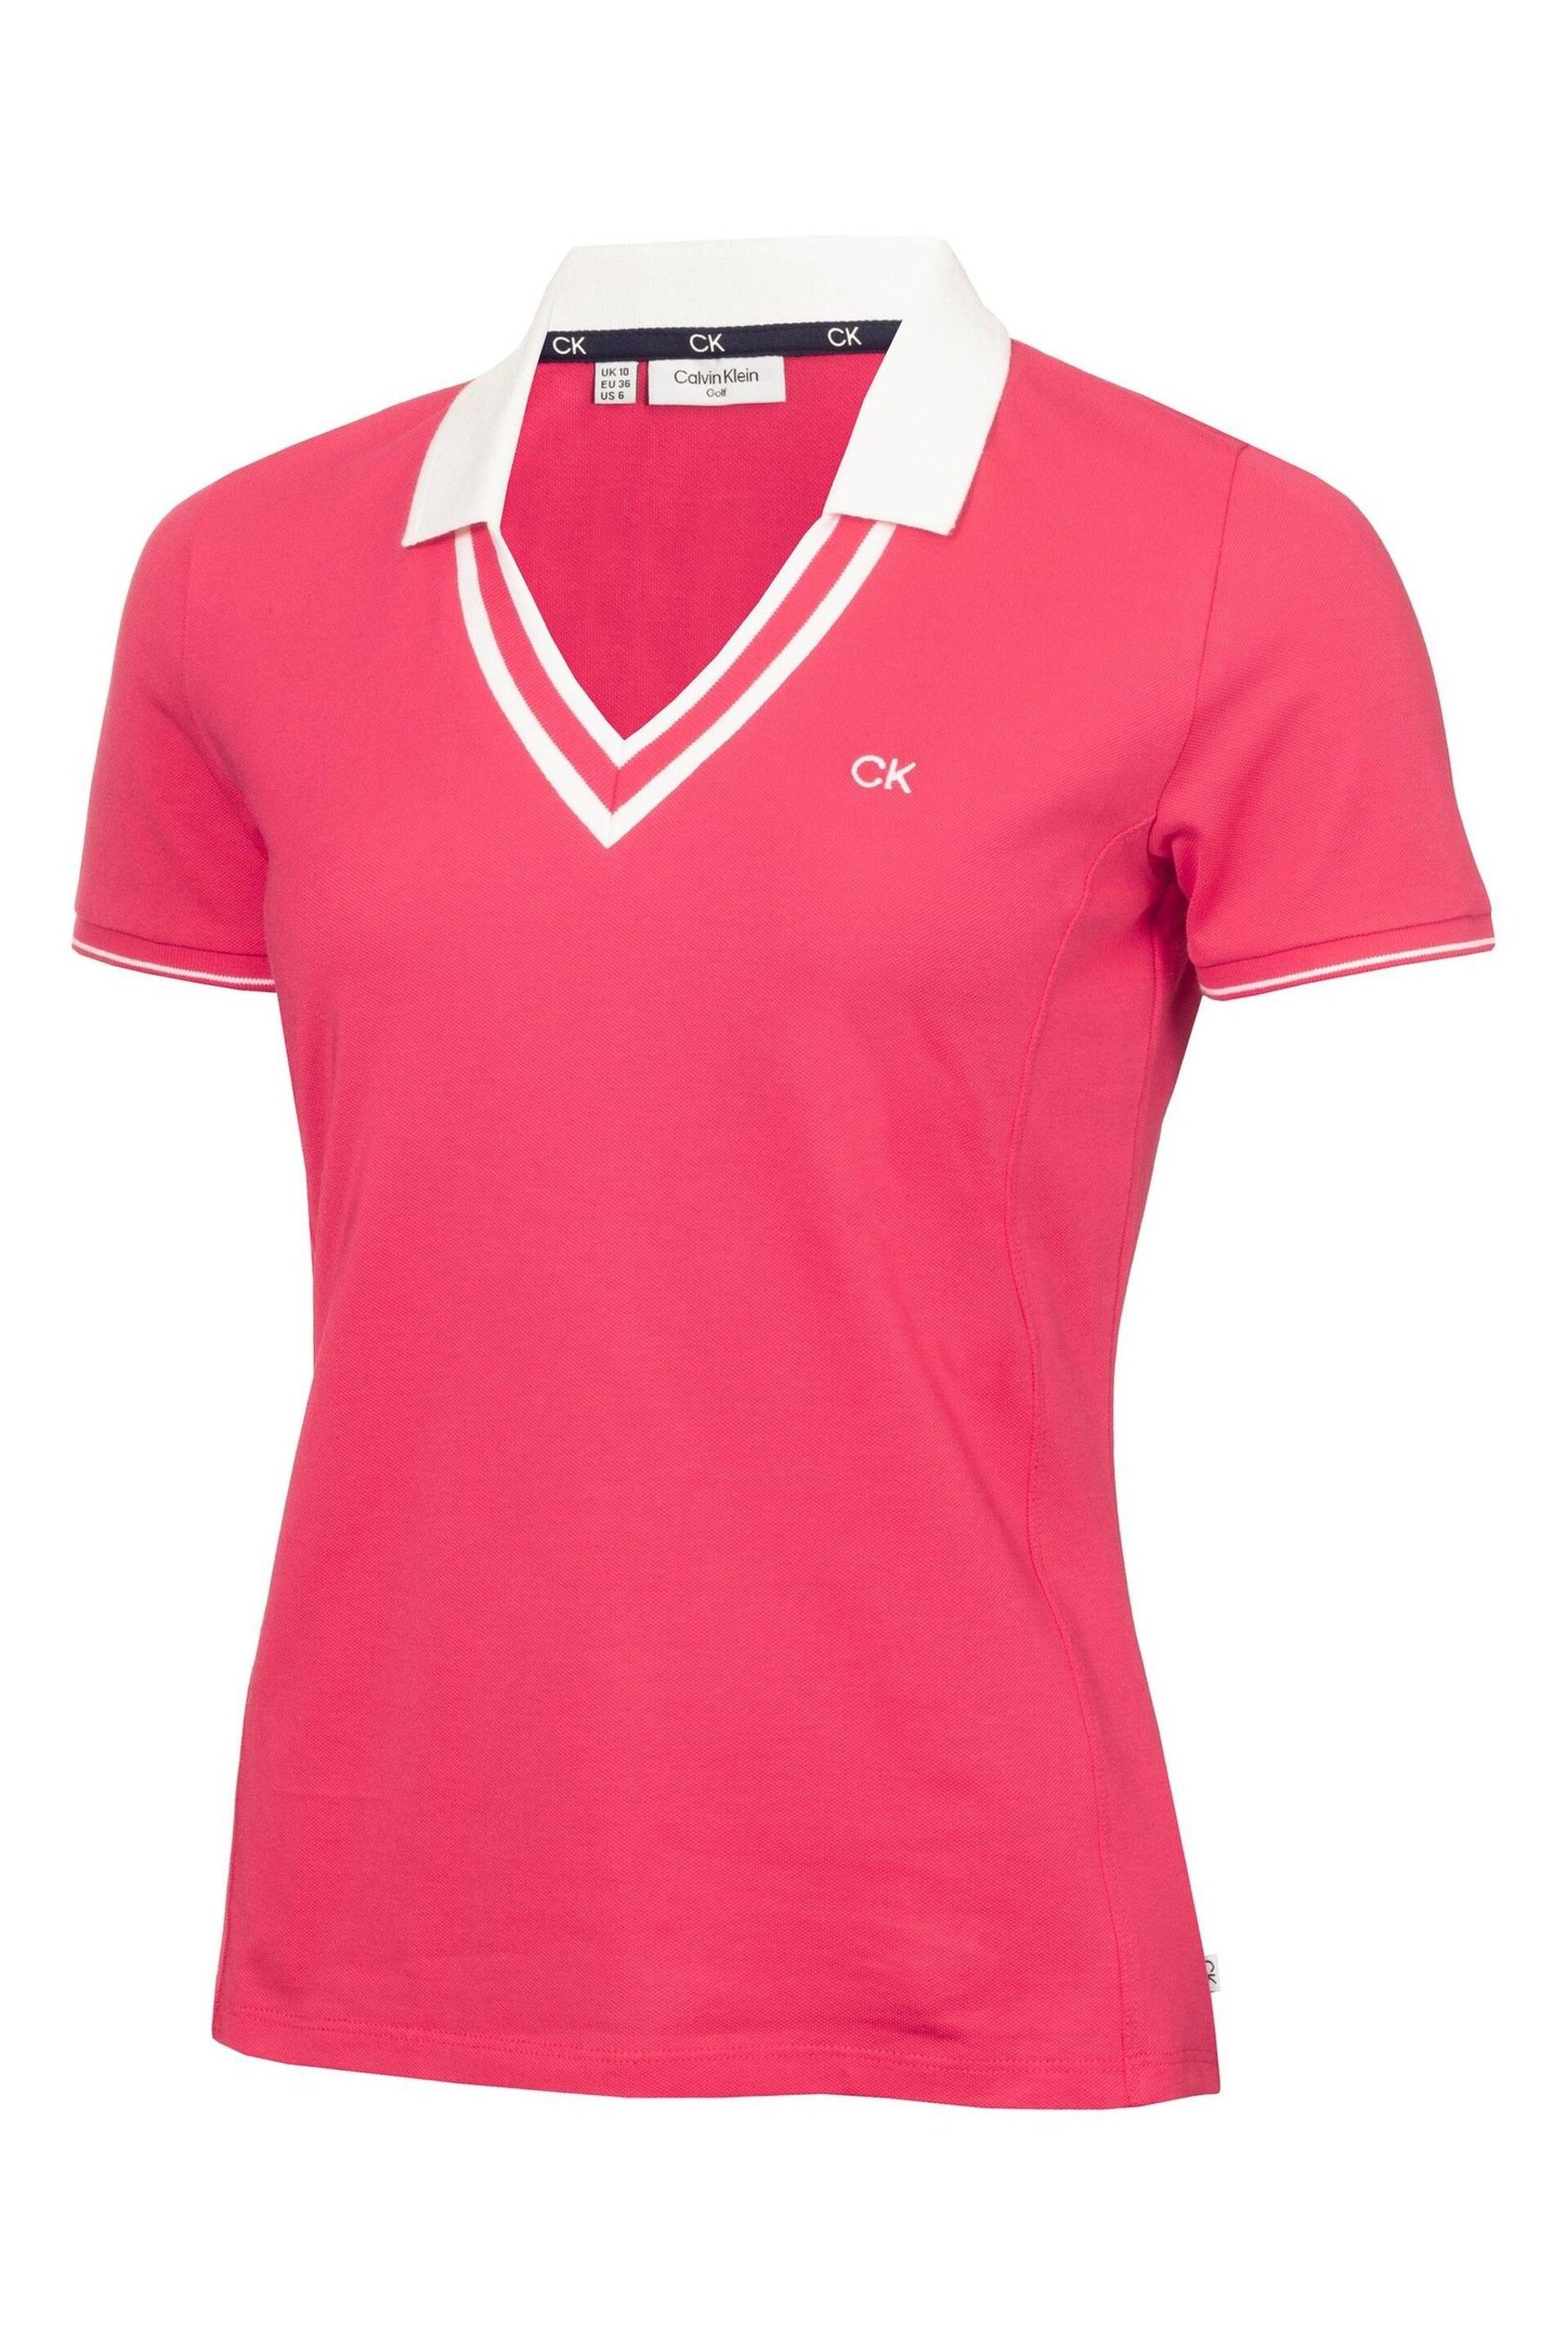 Calvin Klein Golf Pink Delaware Polo Shirt - Image 5 of 8